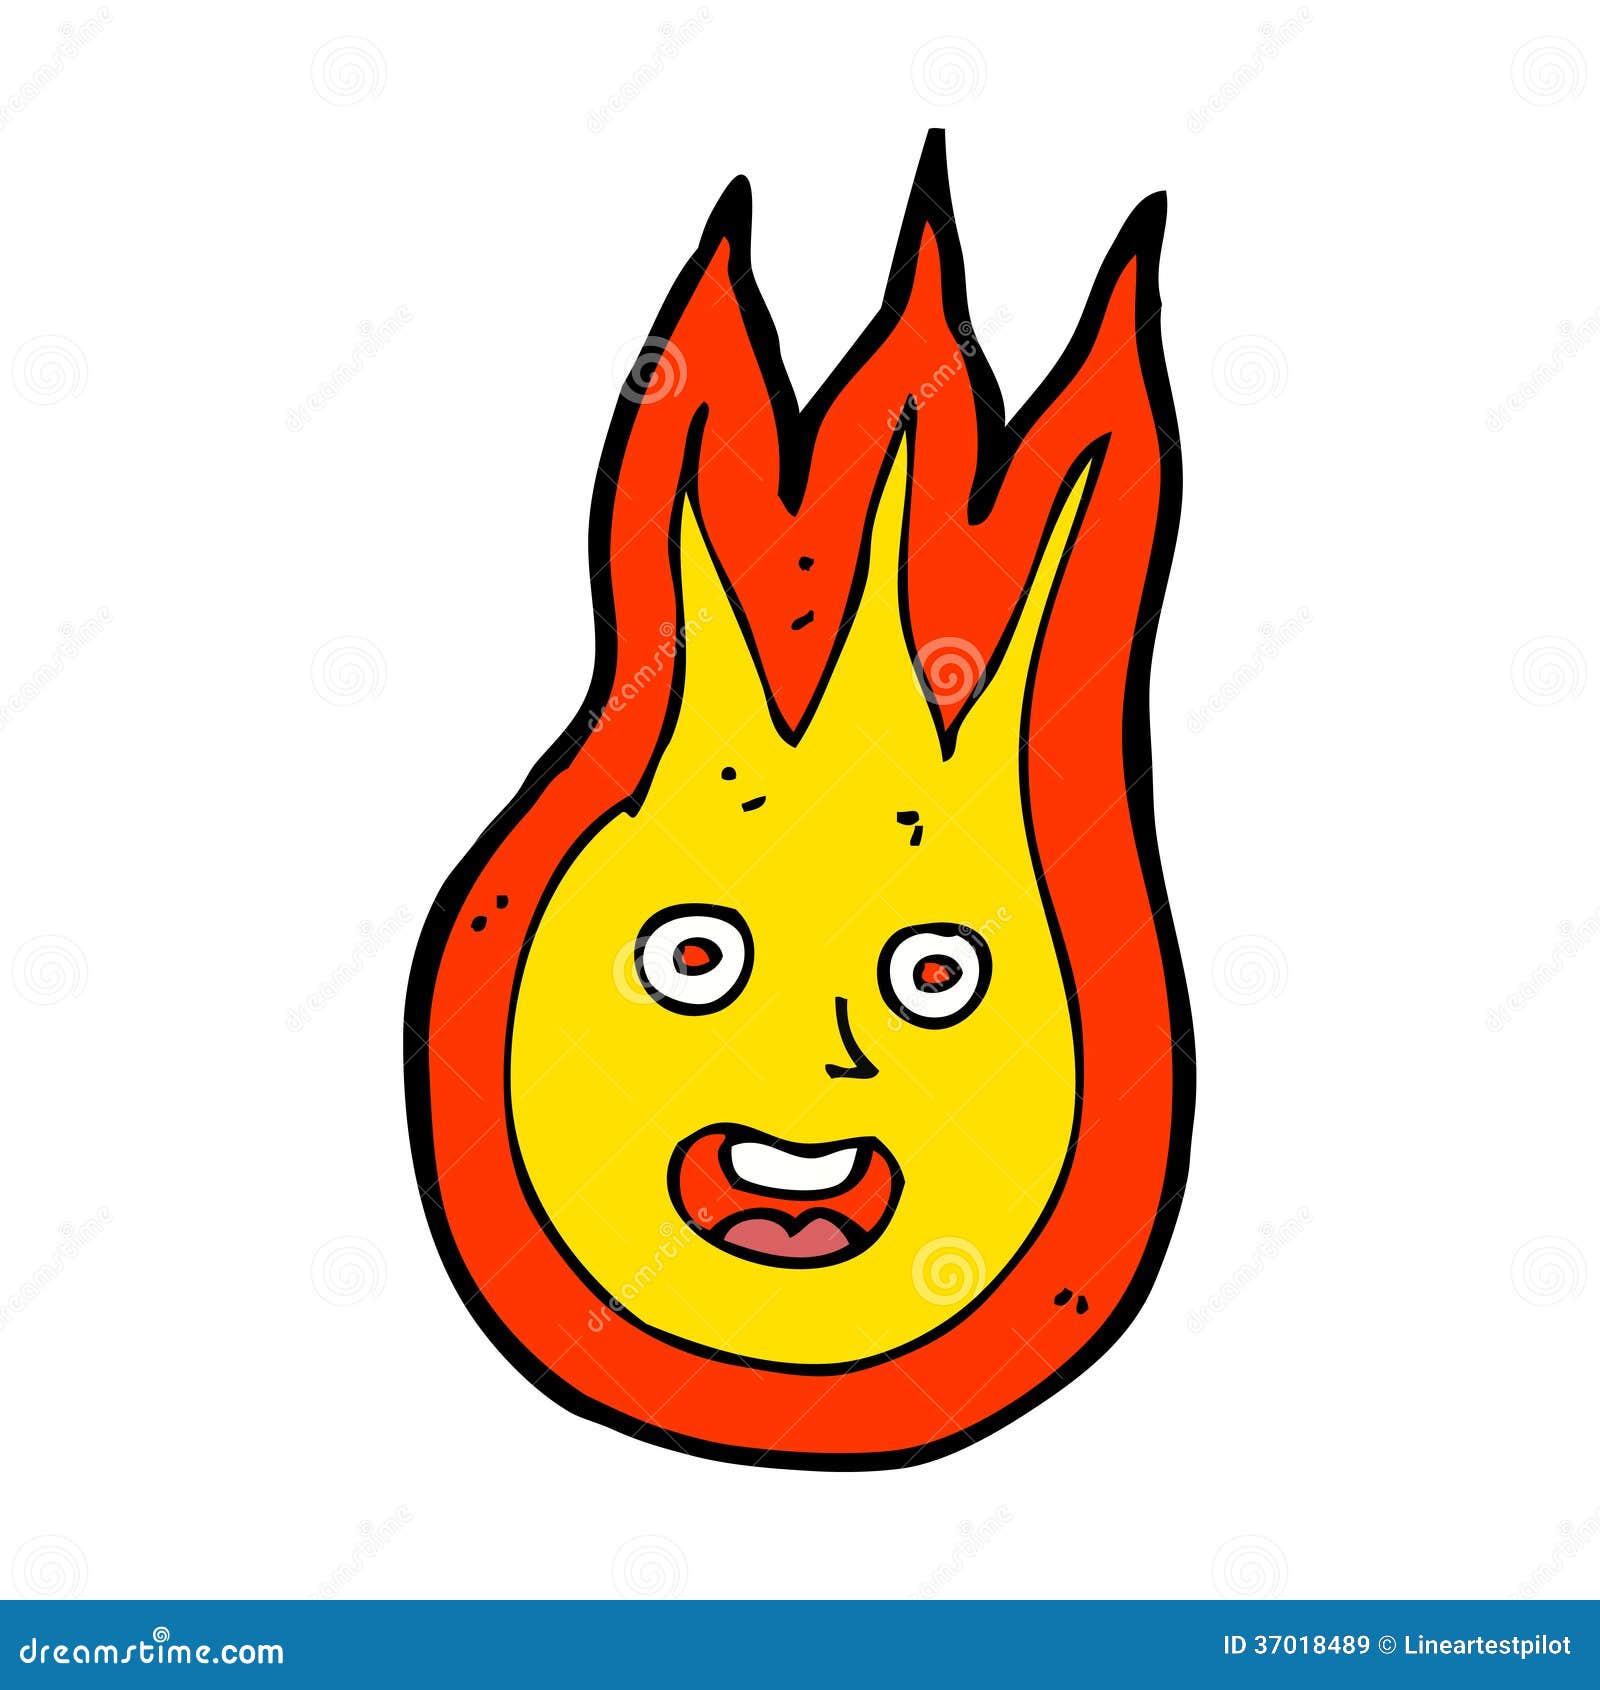 Cartoon friendly fireball stock vector. Illustration of fire - 37018489